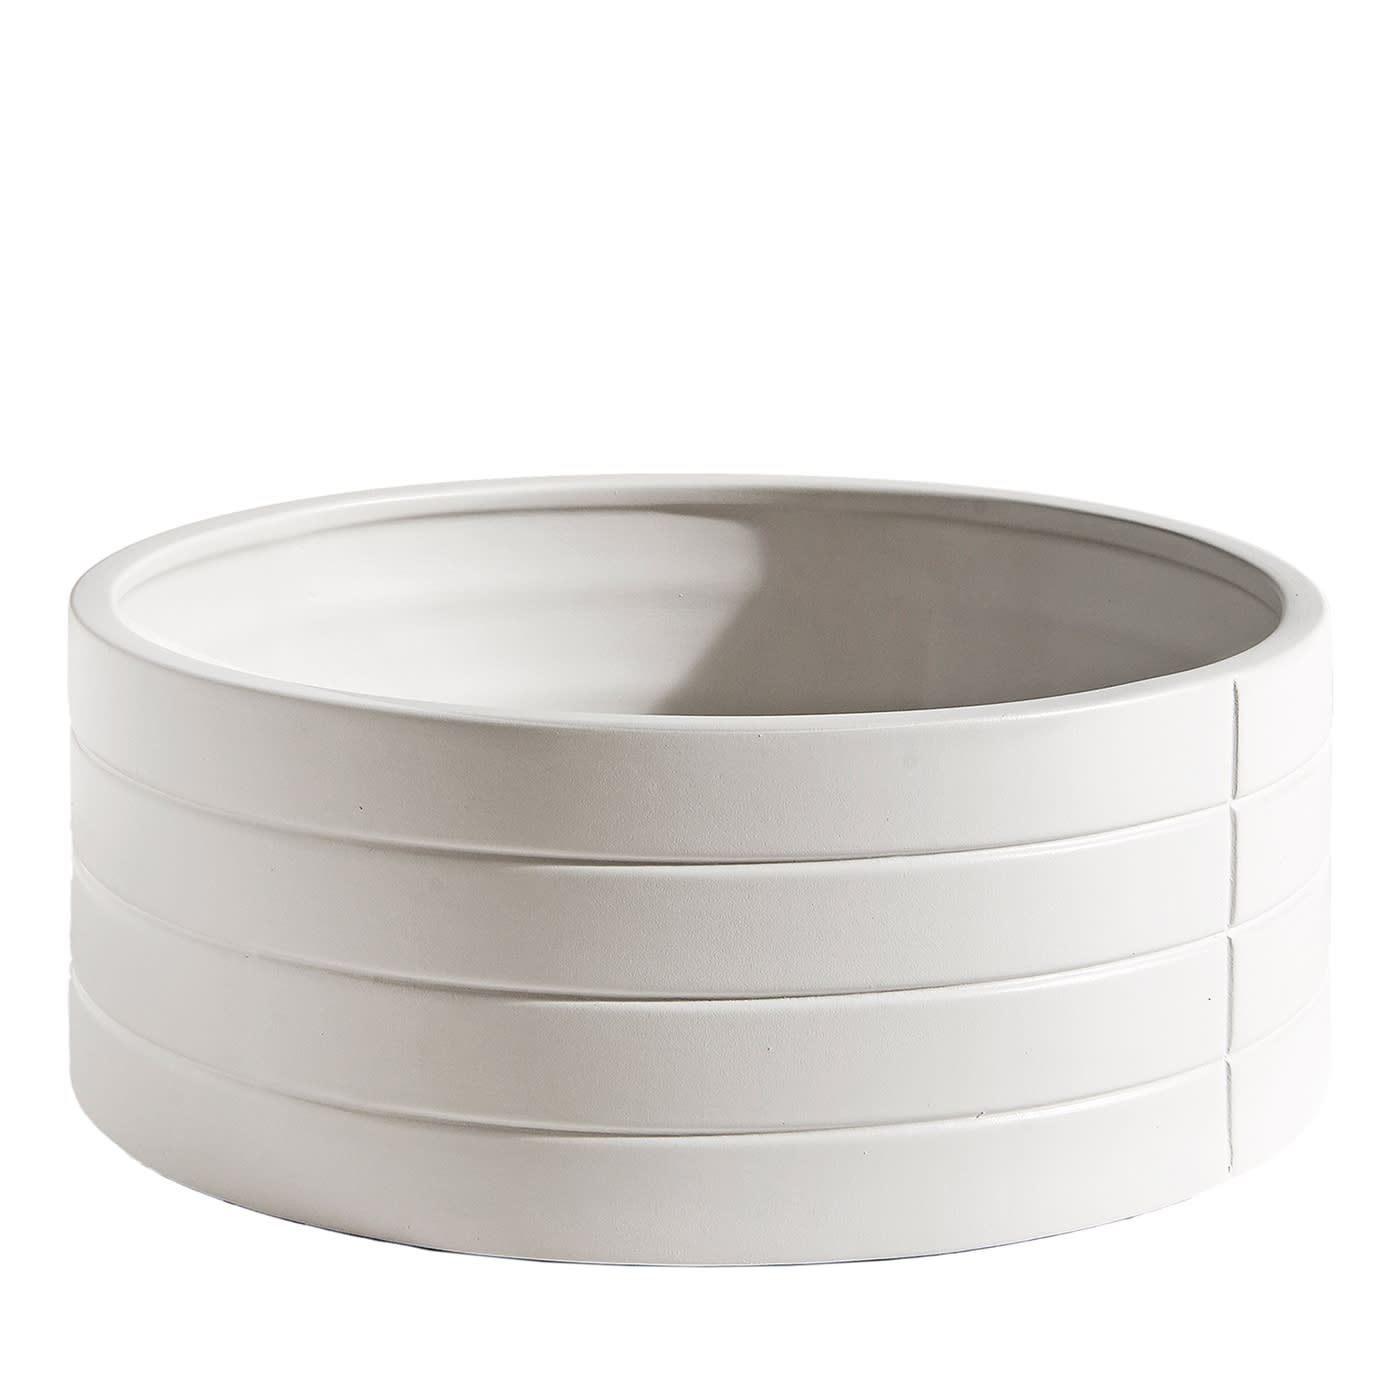 Rikuadra White Ceramic Vase #1 - Atipico